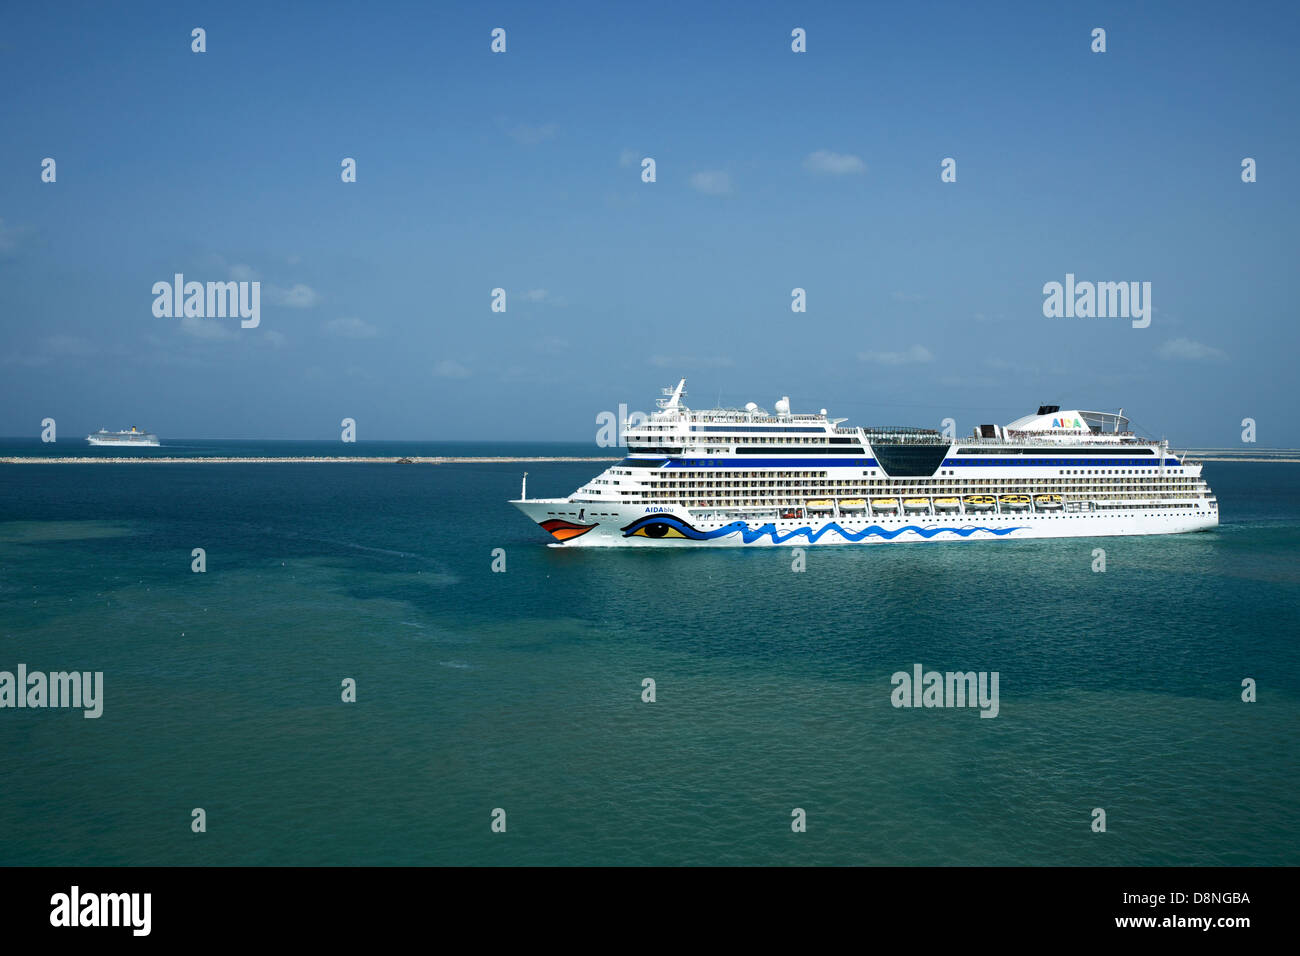 Cruise ship Aidablu leak, Port Rashid, Dubai, UAE Stock Photo